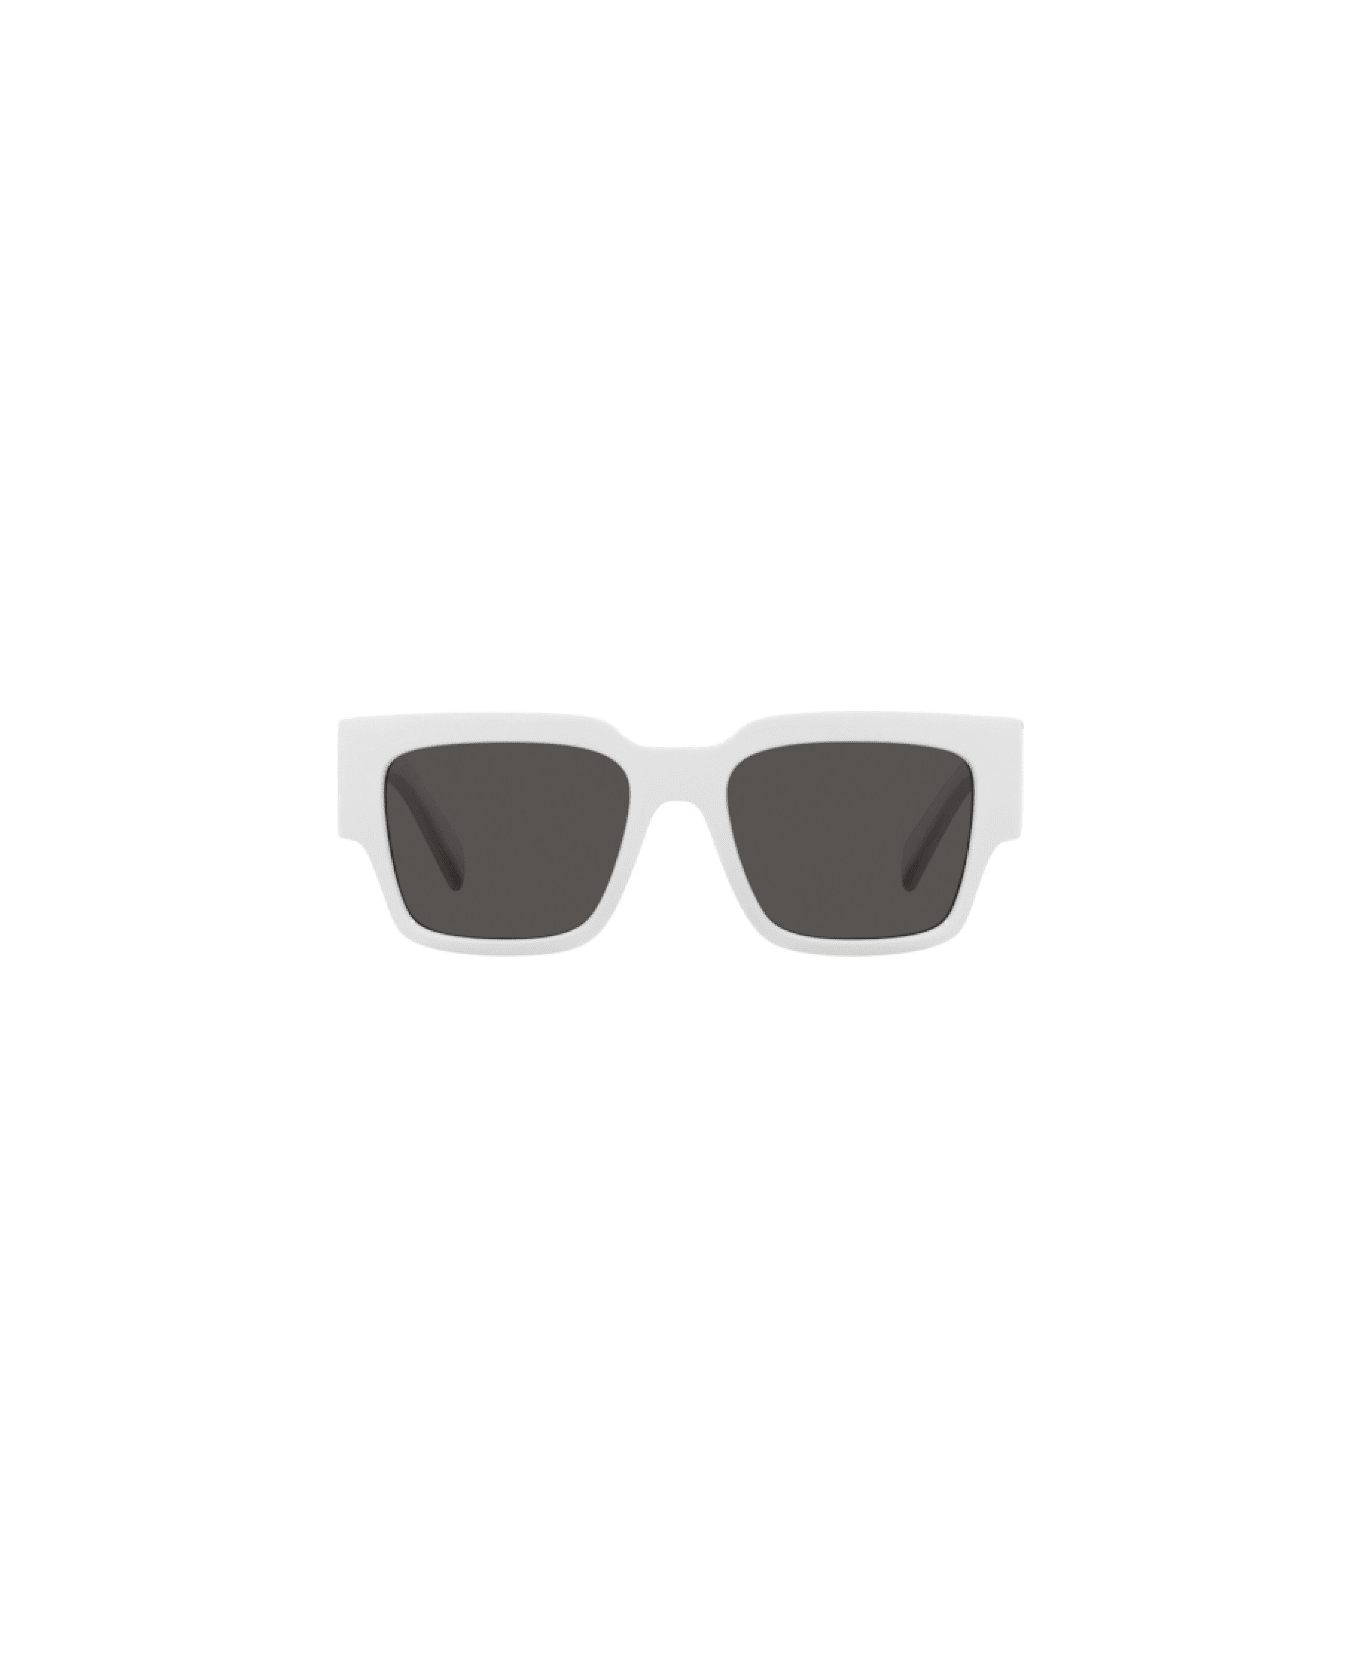 Dolce & Gabbana Eyewear DG6184s Sunglasses - Nero